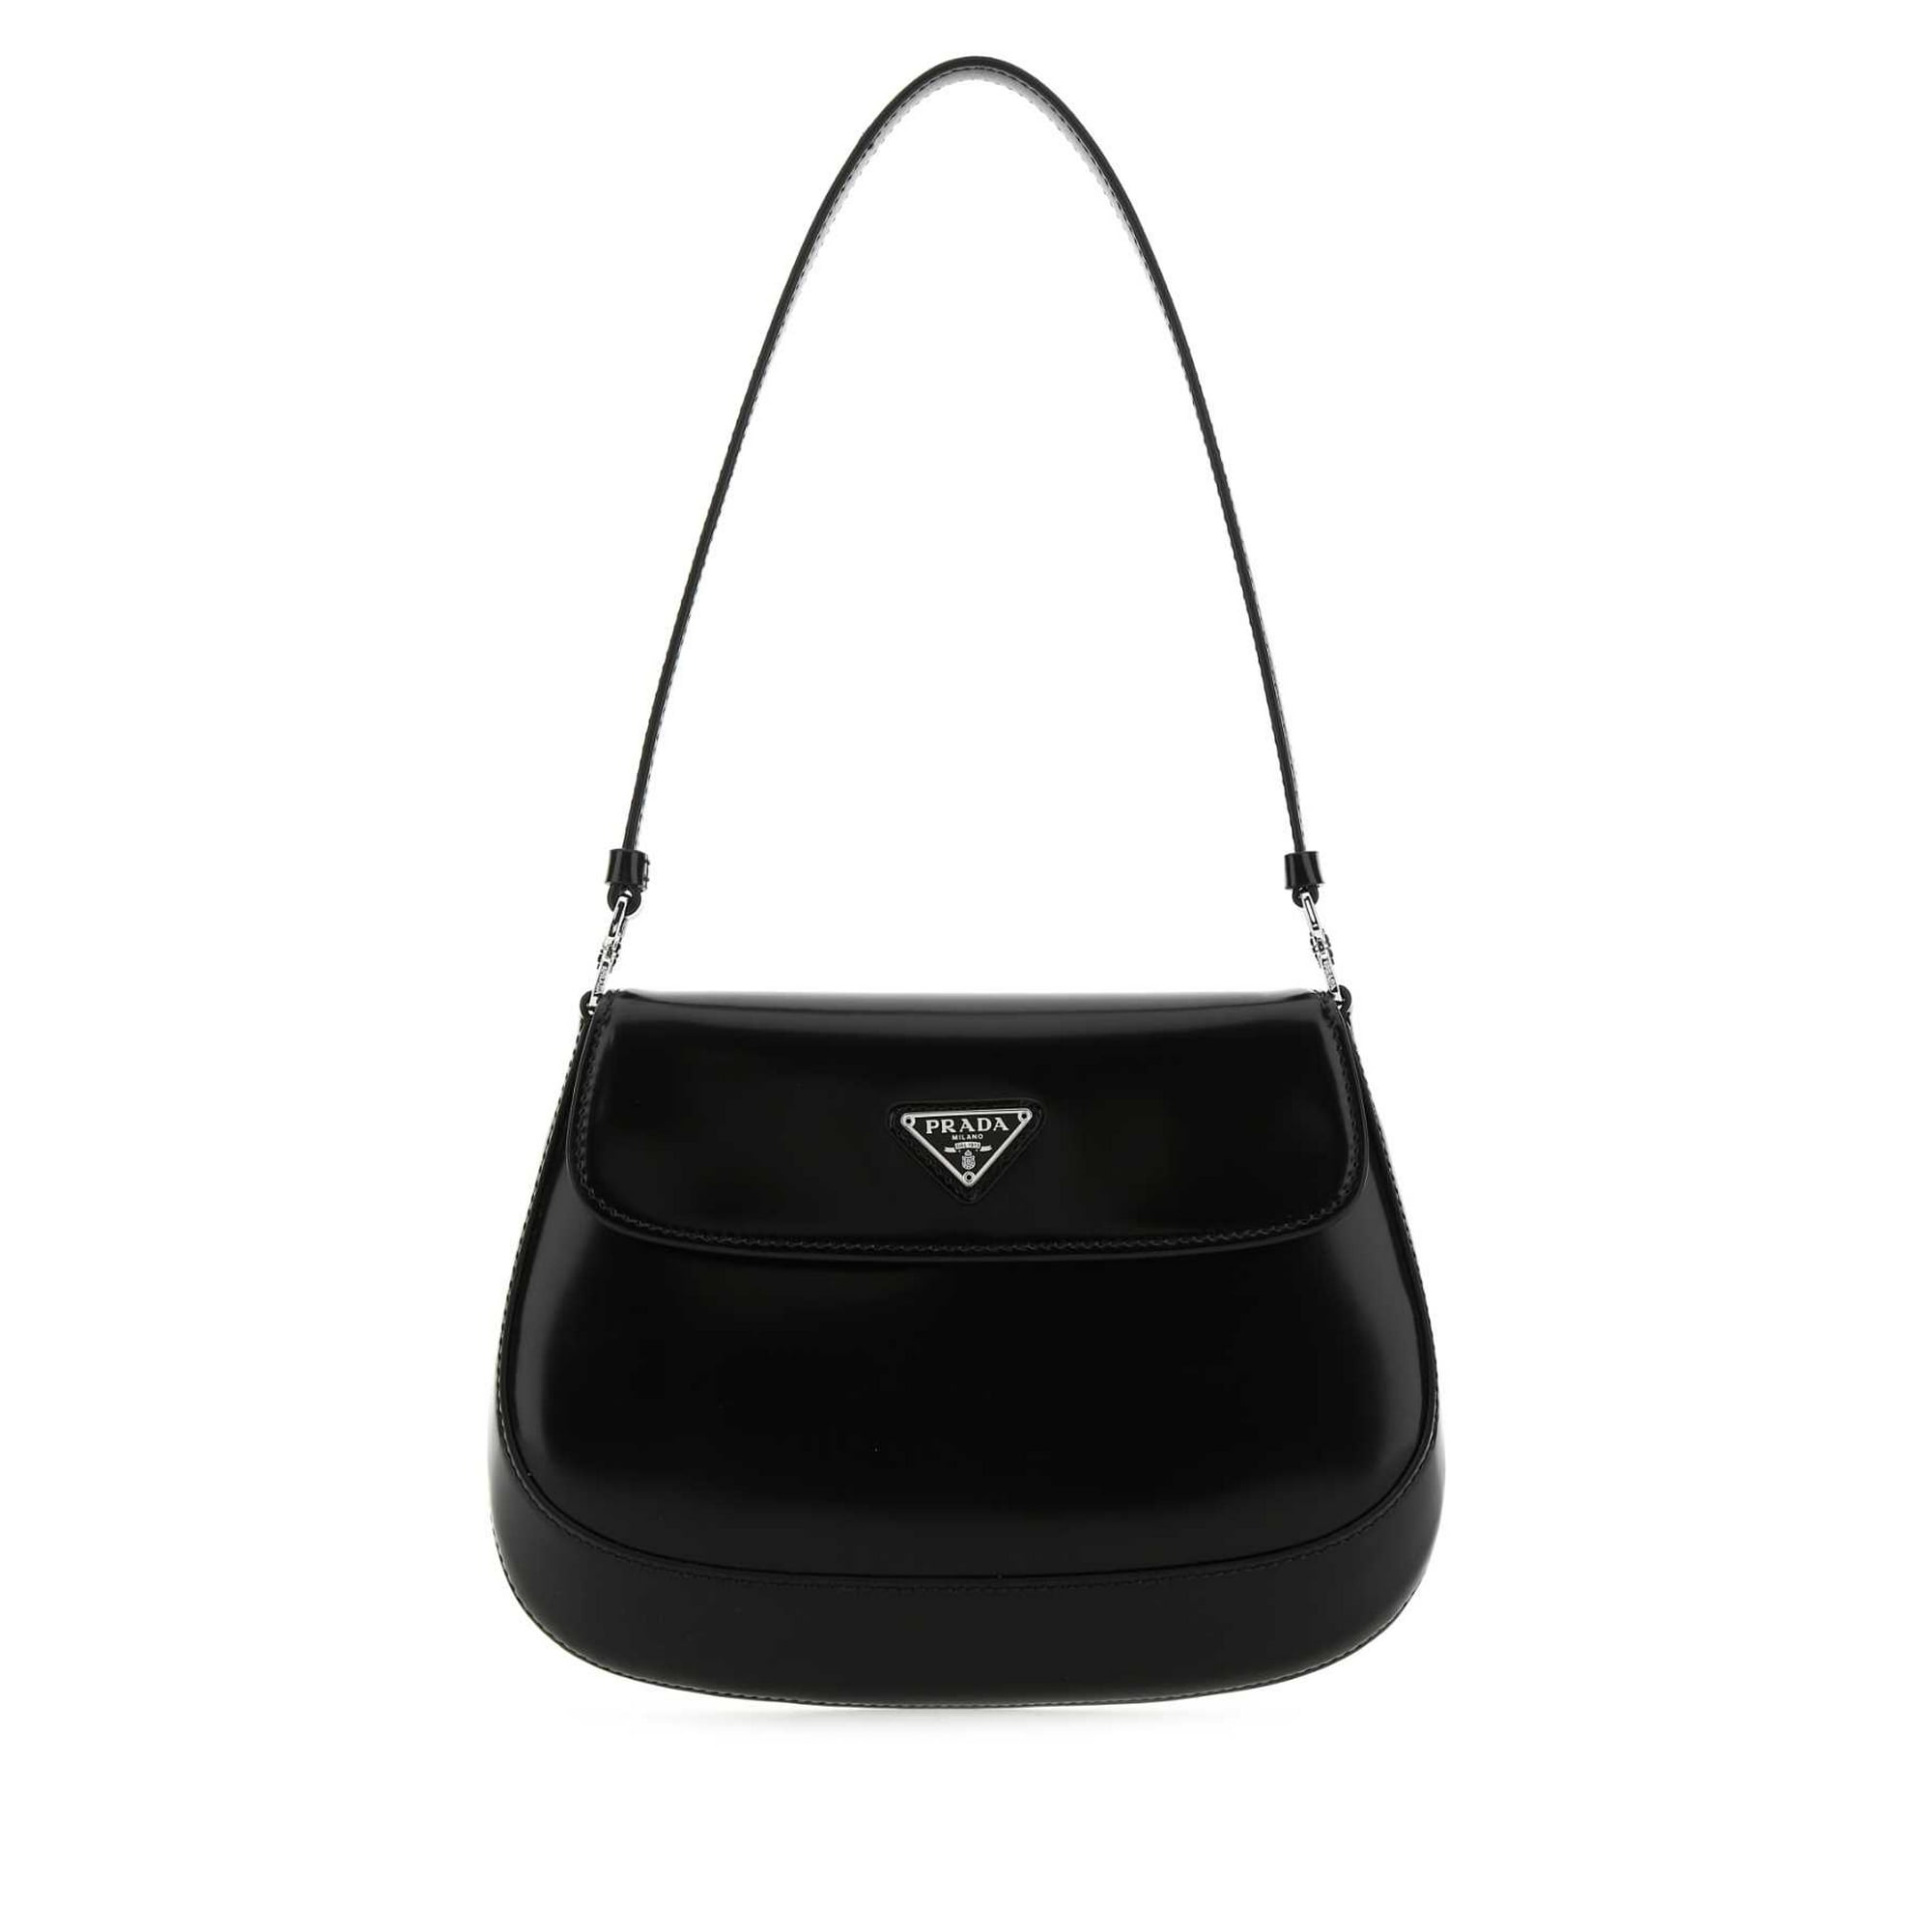 Prada Woman Black Leather Cleo Shoulder Bag 